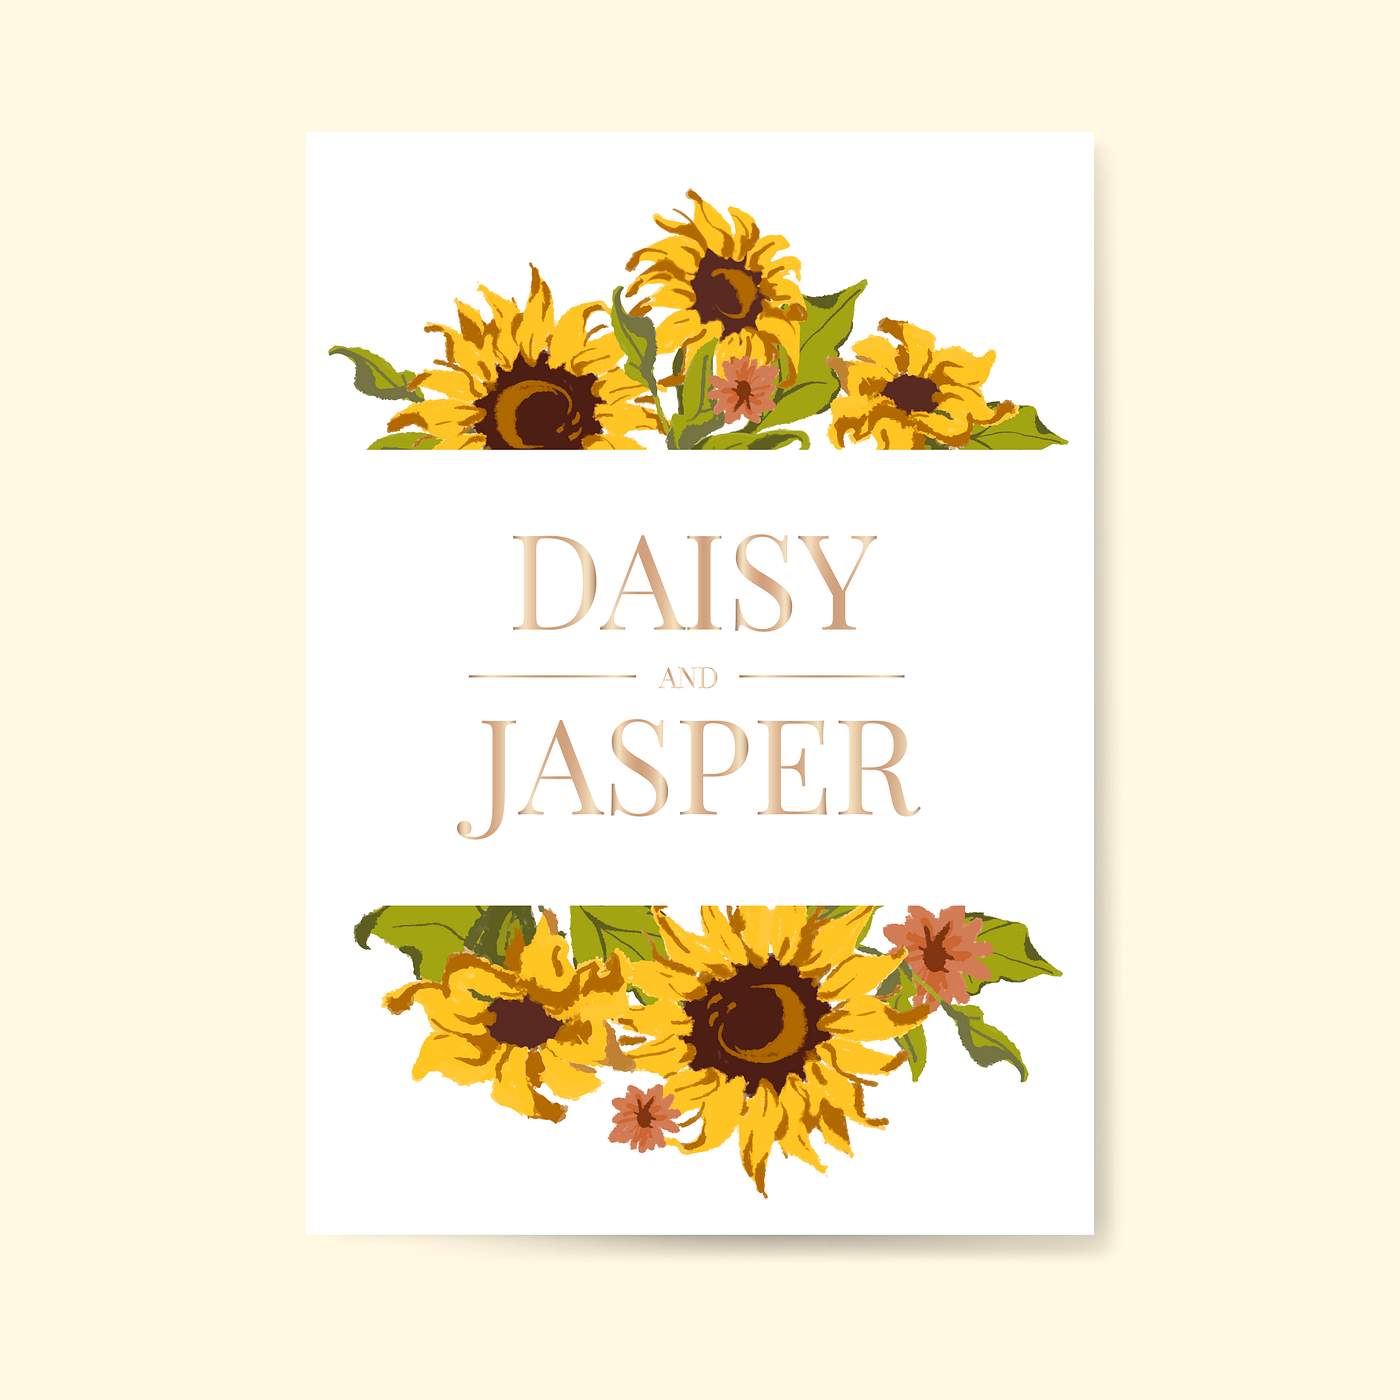 Sunflower wedding invitation card template | Free vector ...